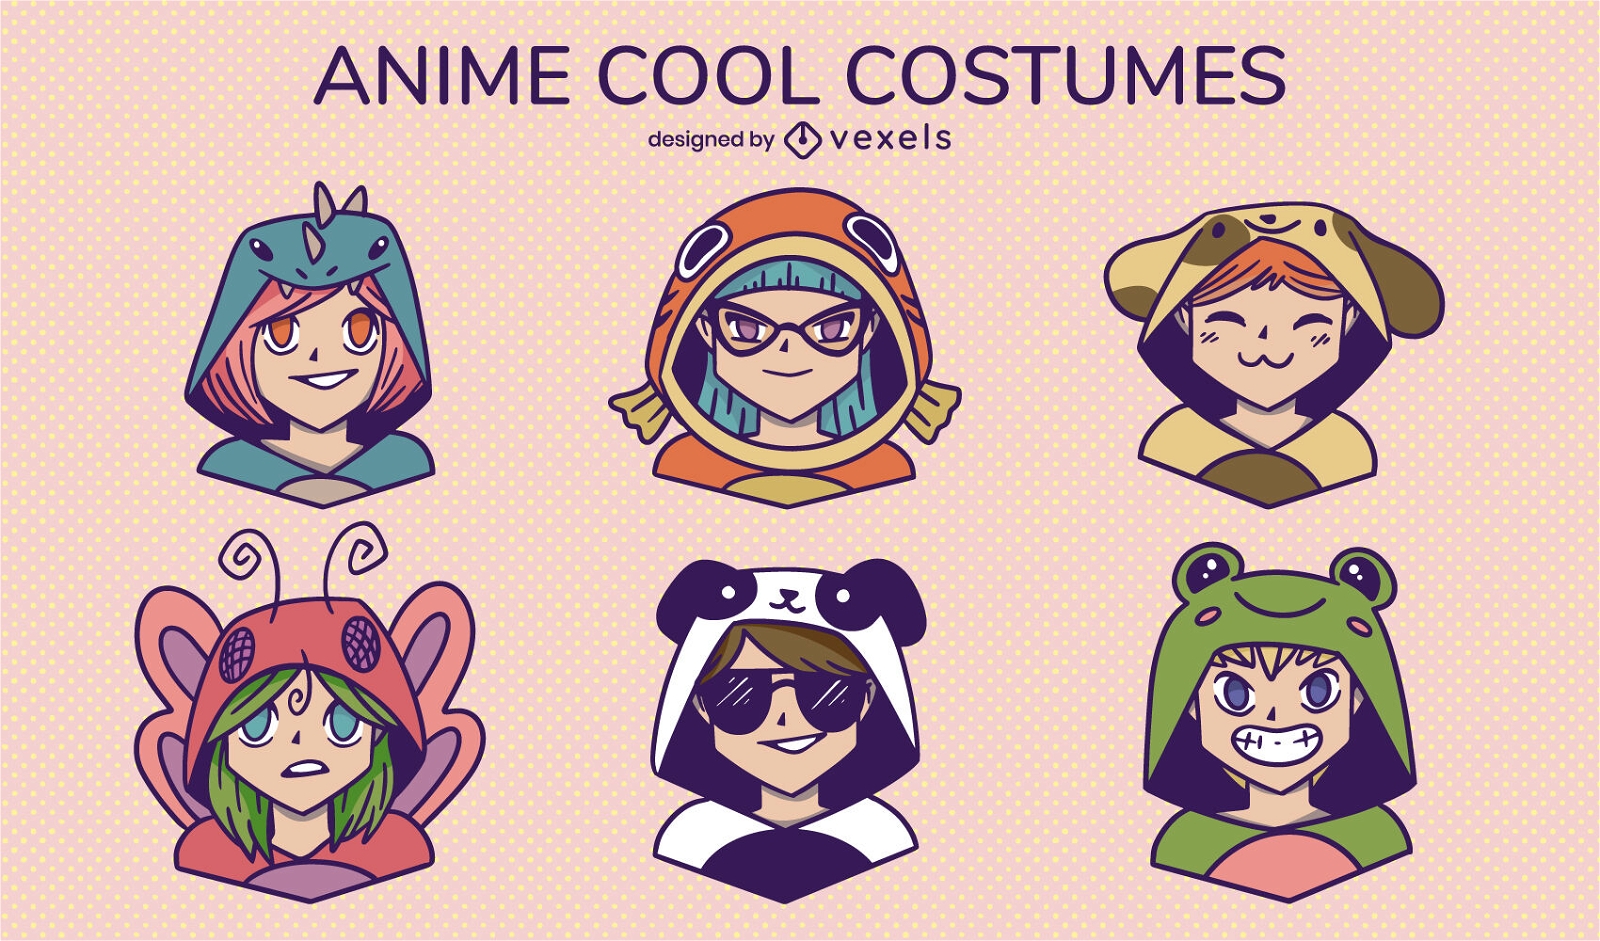 Anime girls in animal costumes cute set